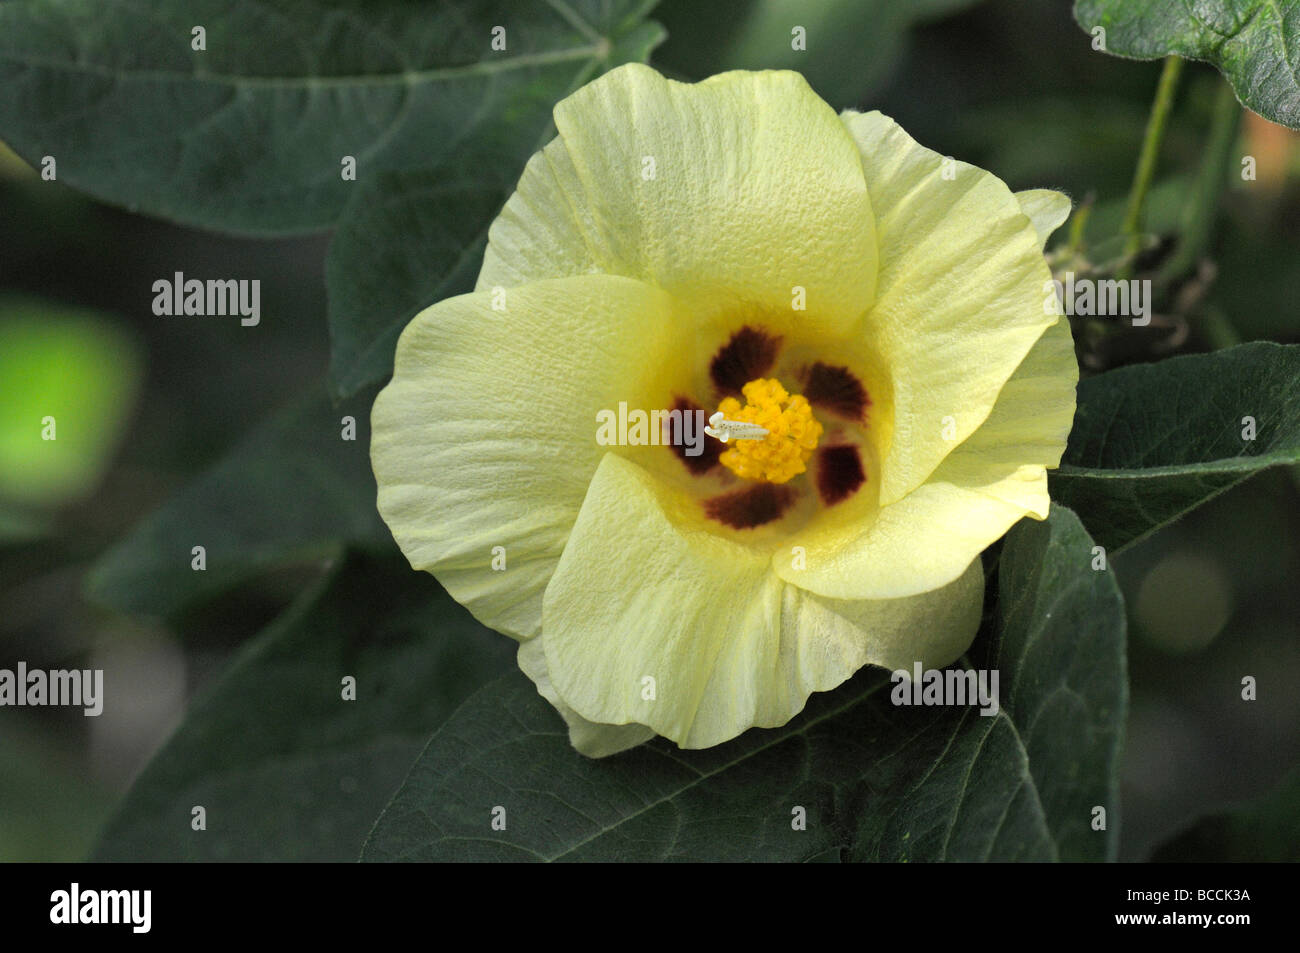 Sea Island Cotton, Pima Cotton (Gossypium barbadense), flower Stock Photo